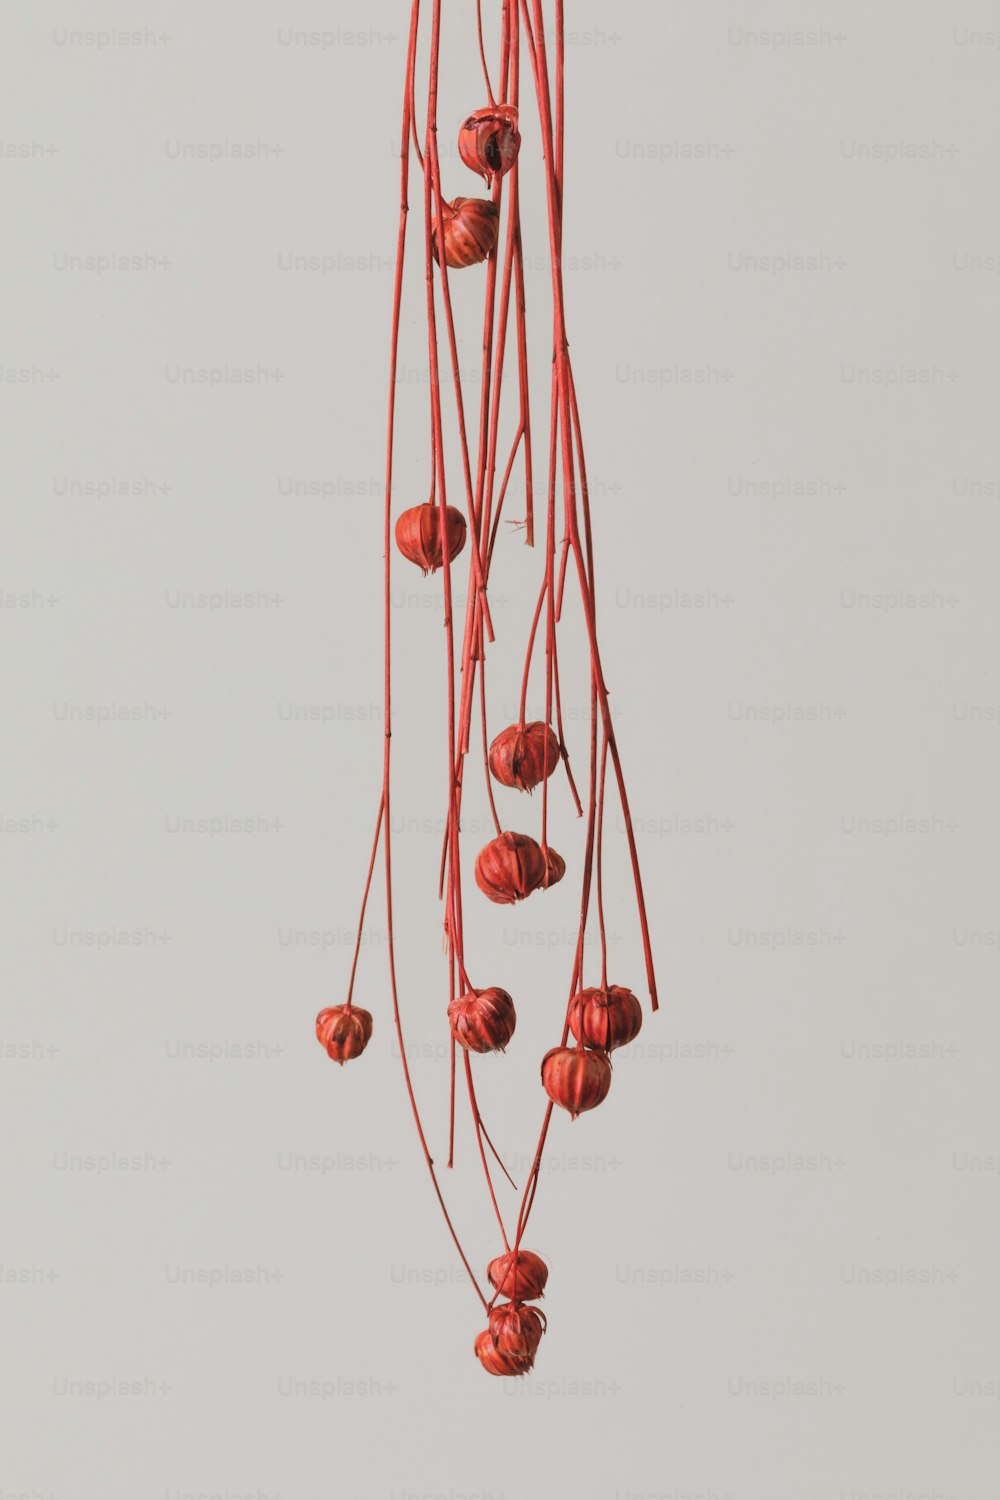 Un ramo de flores rojas colgando de un alambre